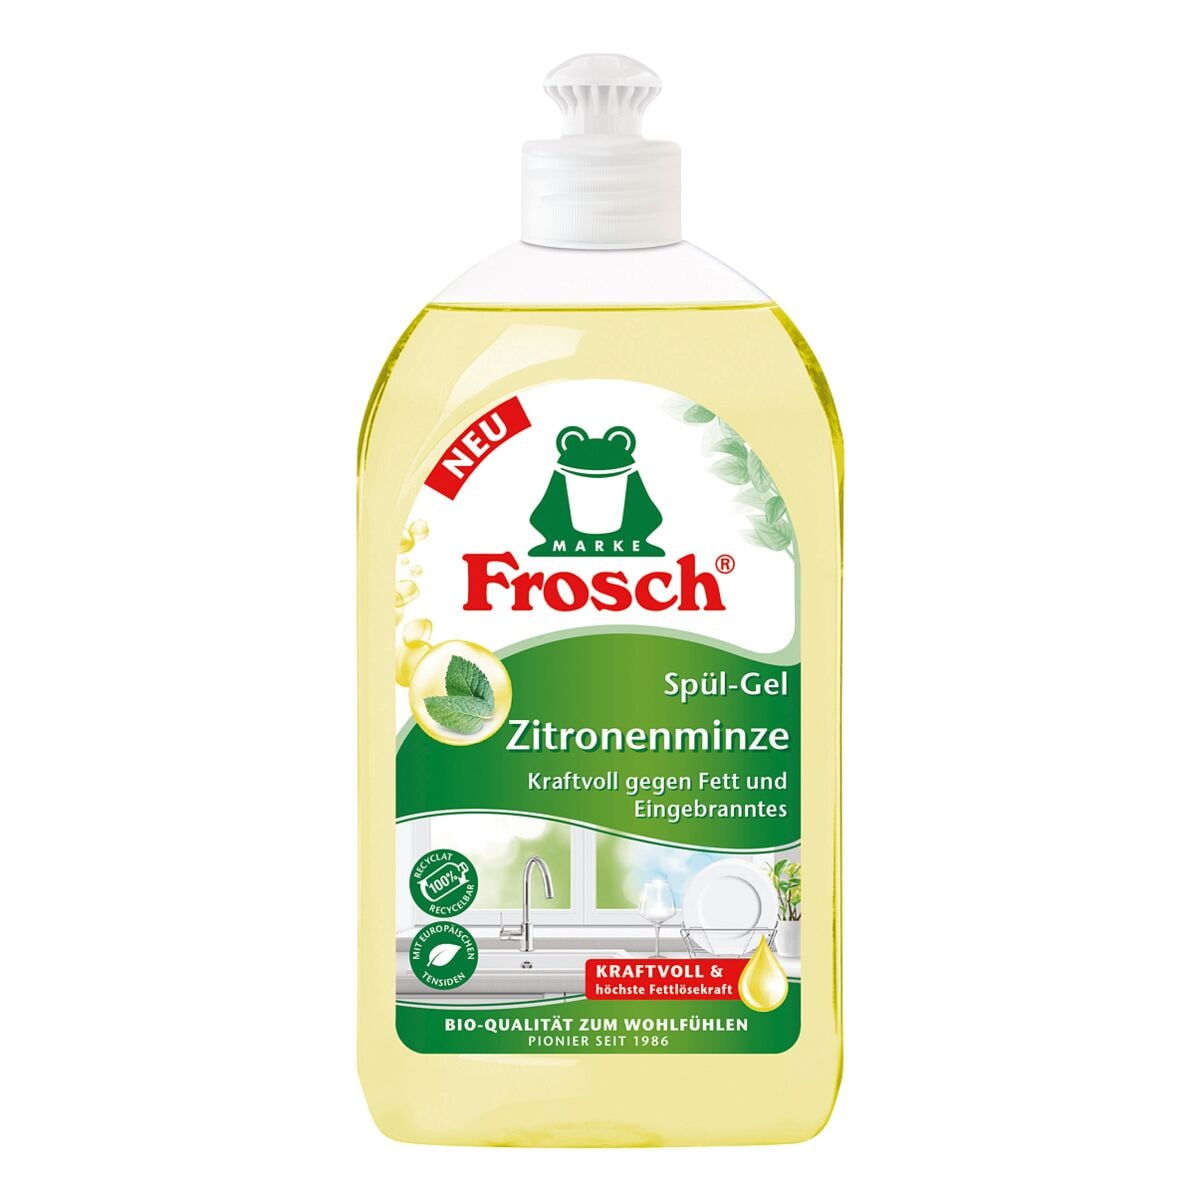 Frosch Handsplmittel Zitronenminze 500 ml